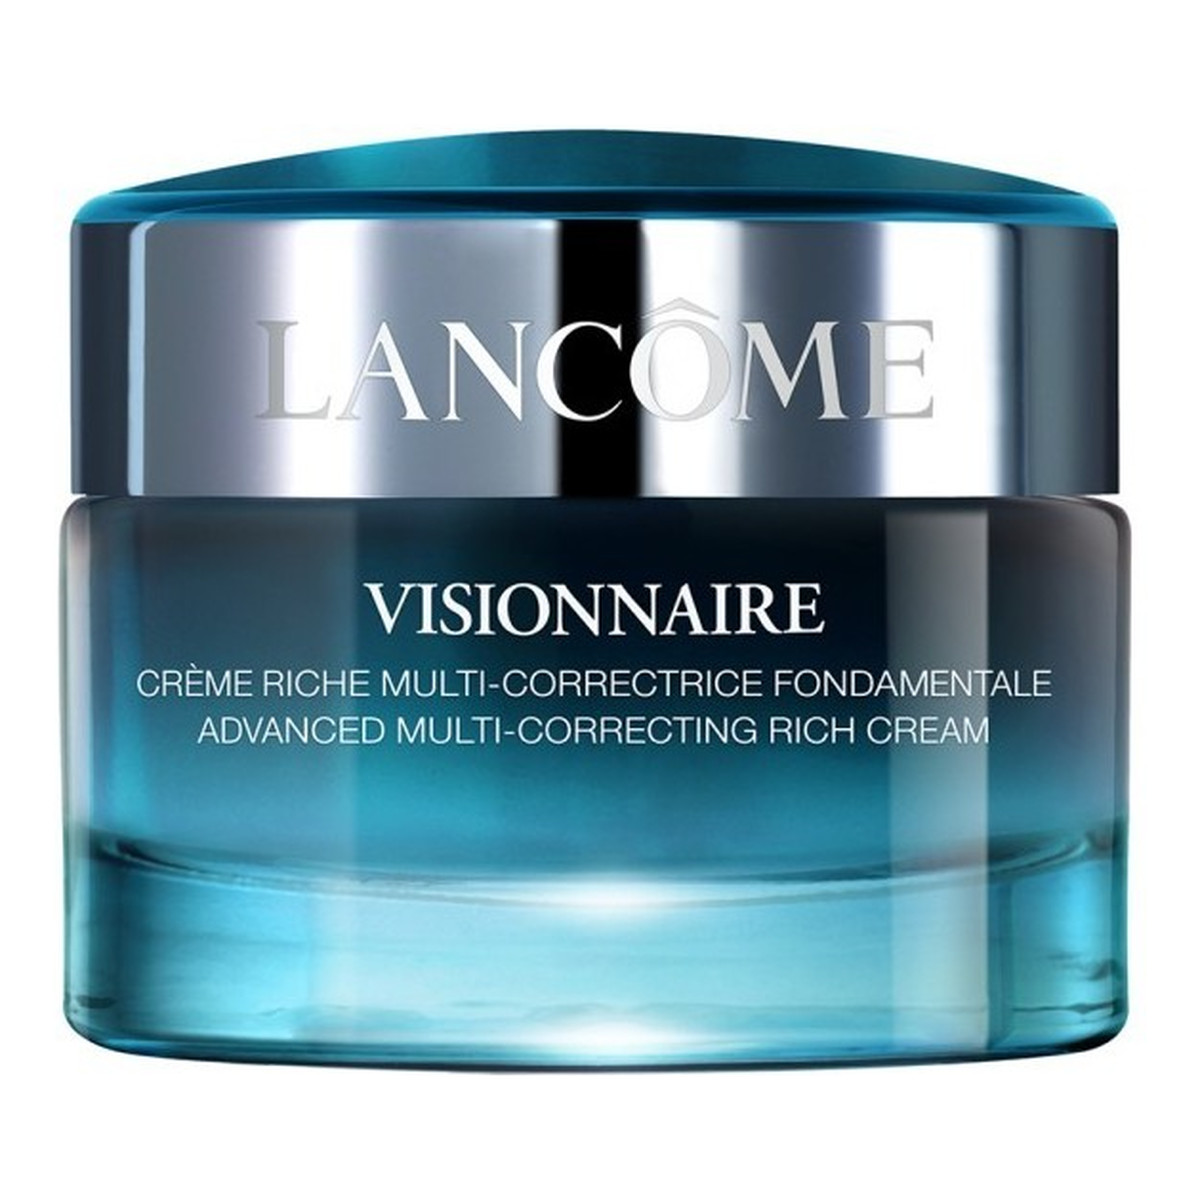 Lancome Visionnaire Advanced Multi-Correcting Rich Cream Krem korygujący do skóry suchej 50ml